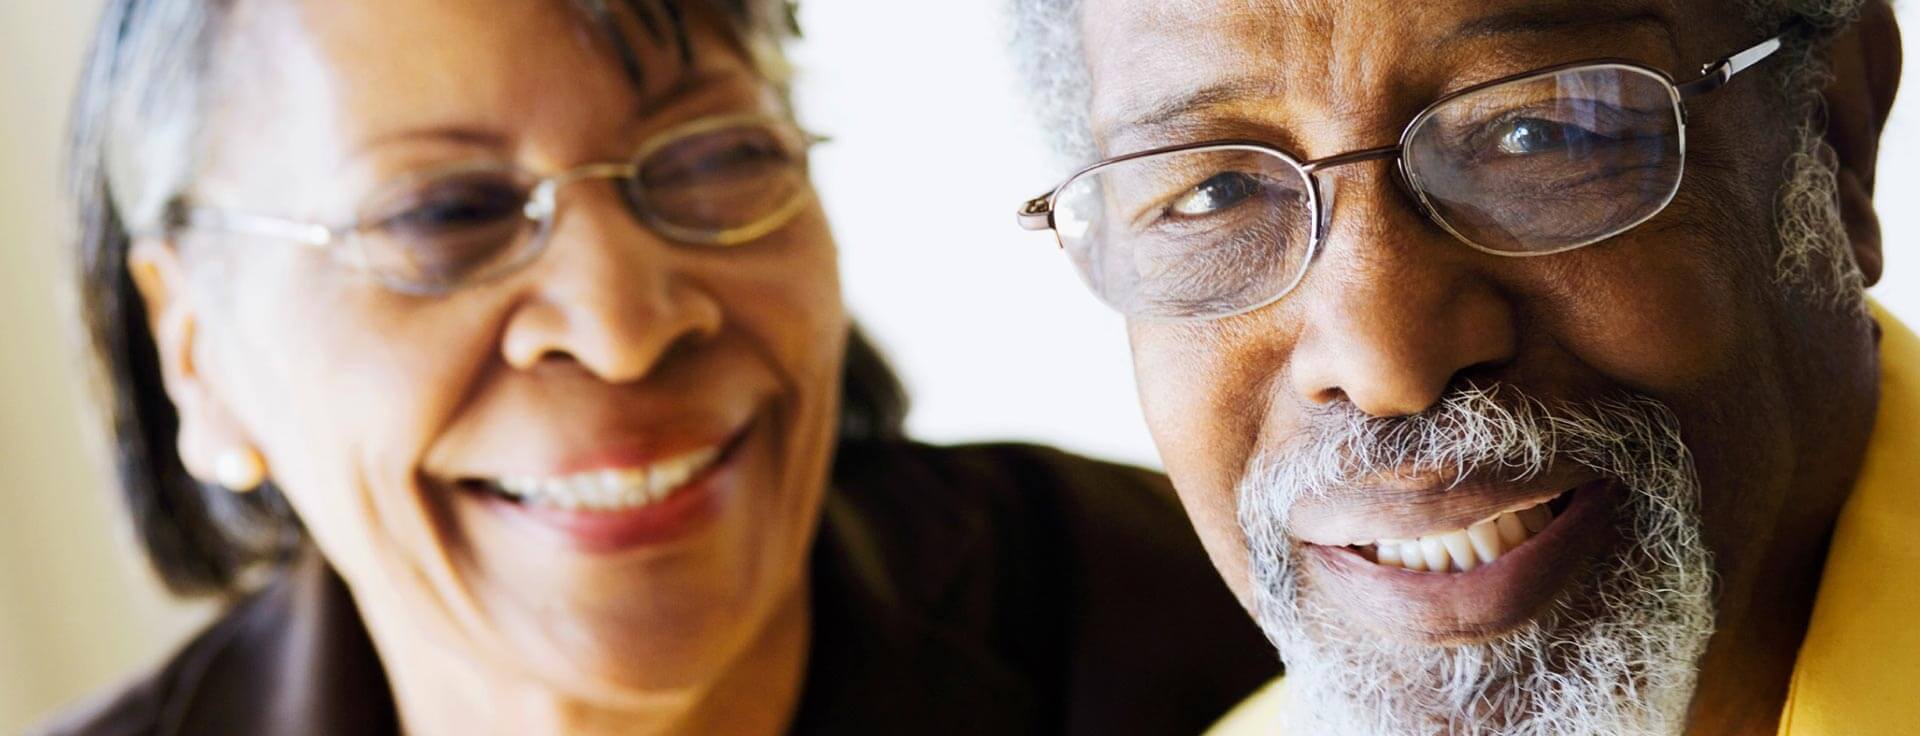 Close-up of senior man and woman, both wearing glasses